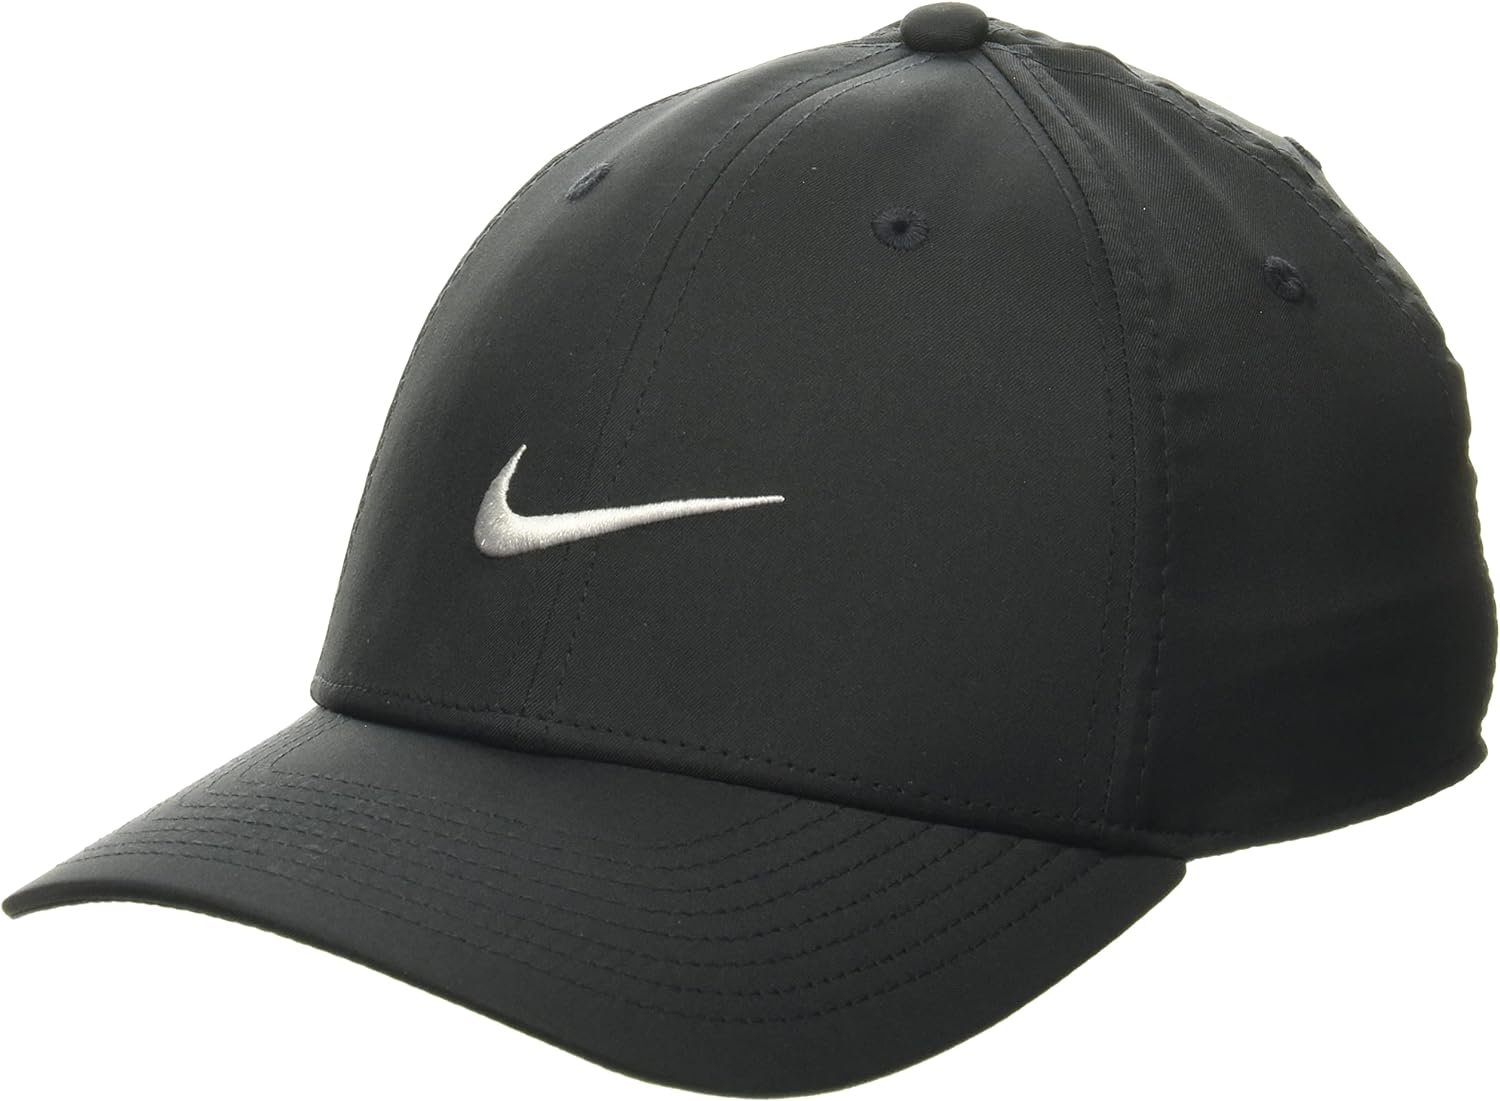 Nike Swoosh Cap in Black.jpg